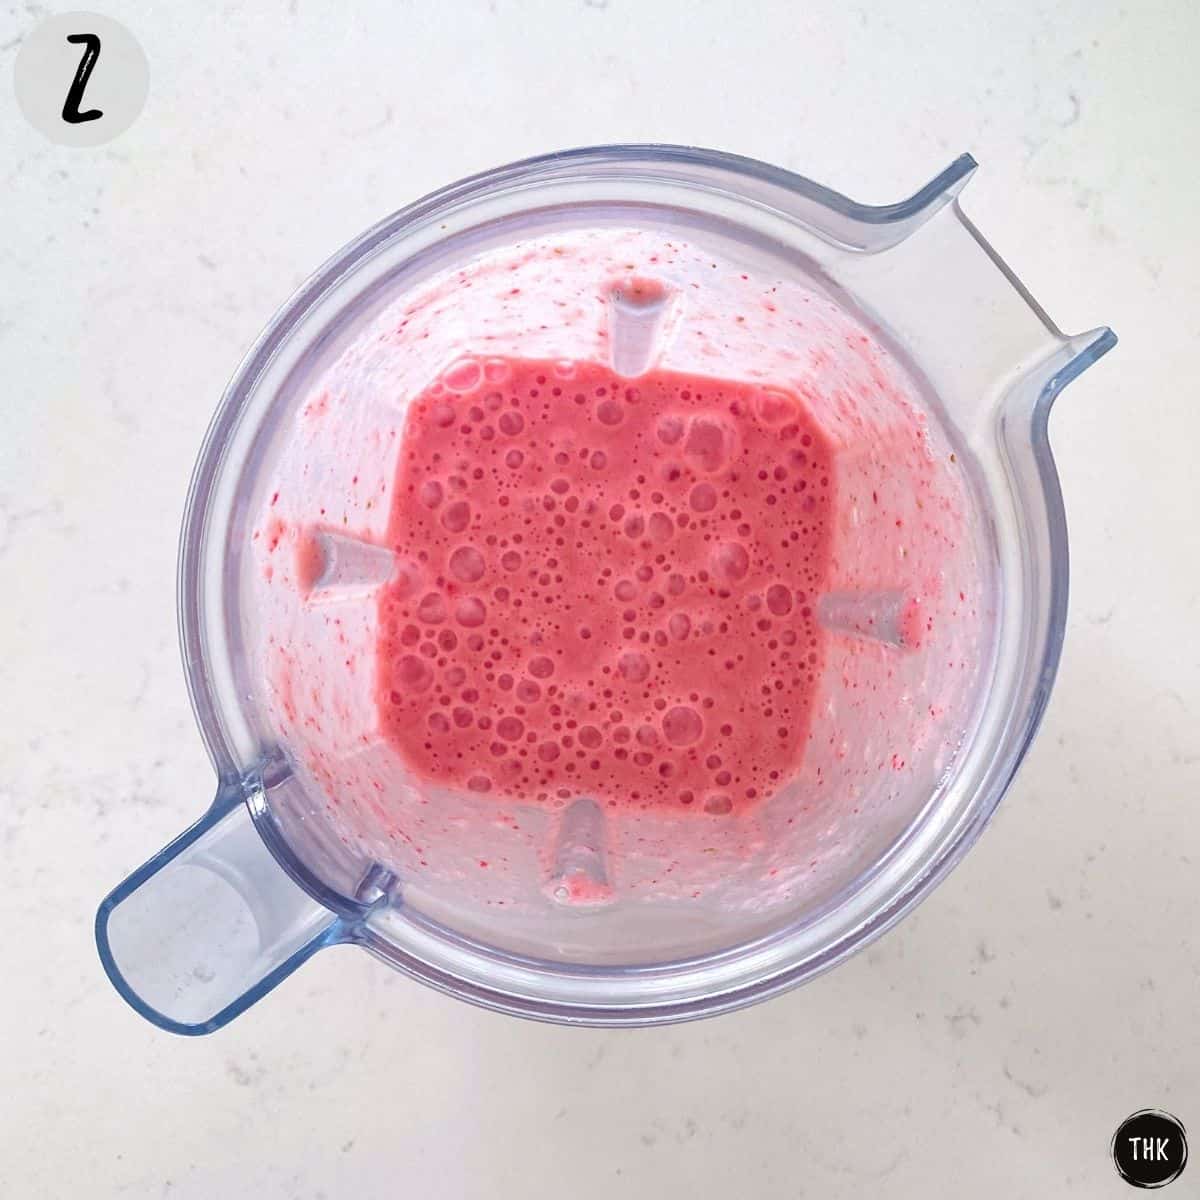 Pink pureed liquid inside blender.